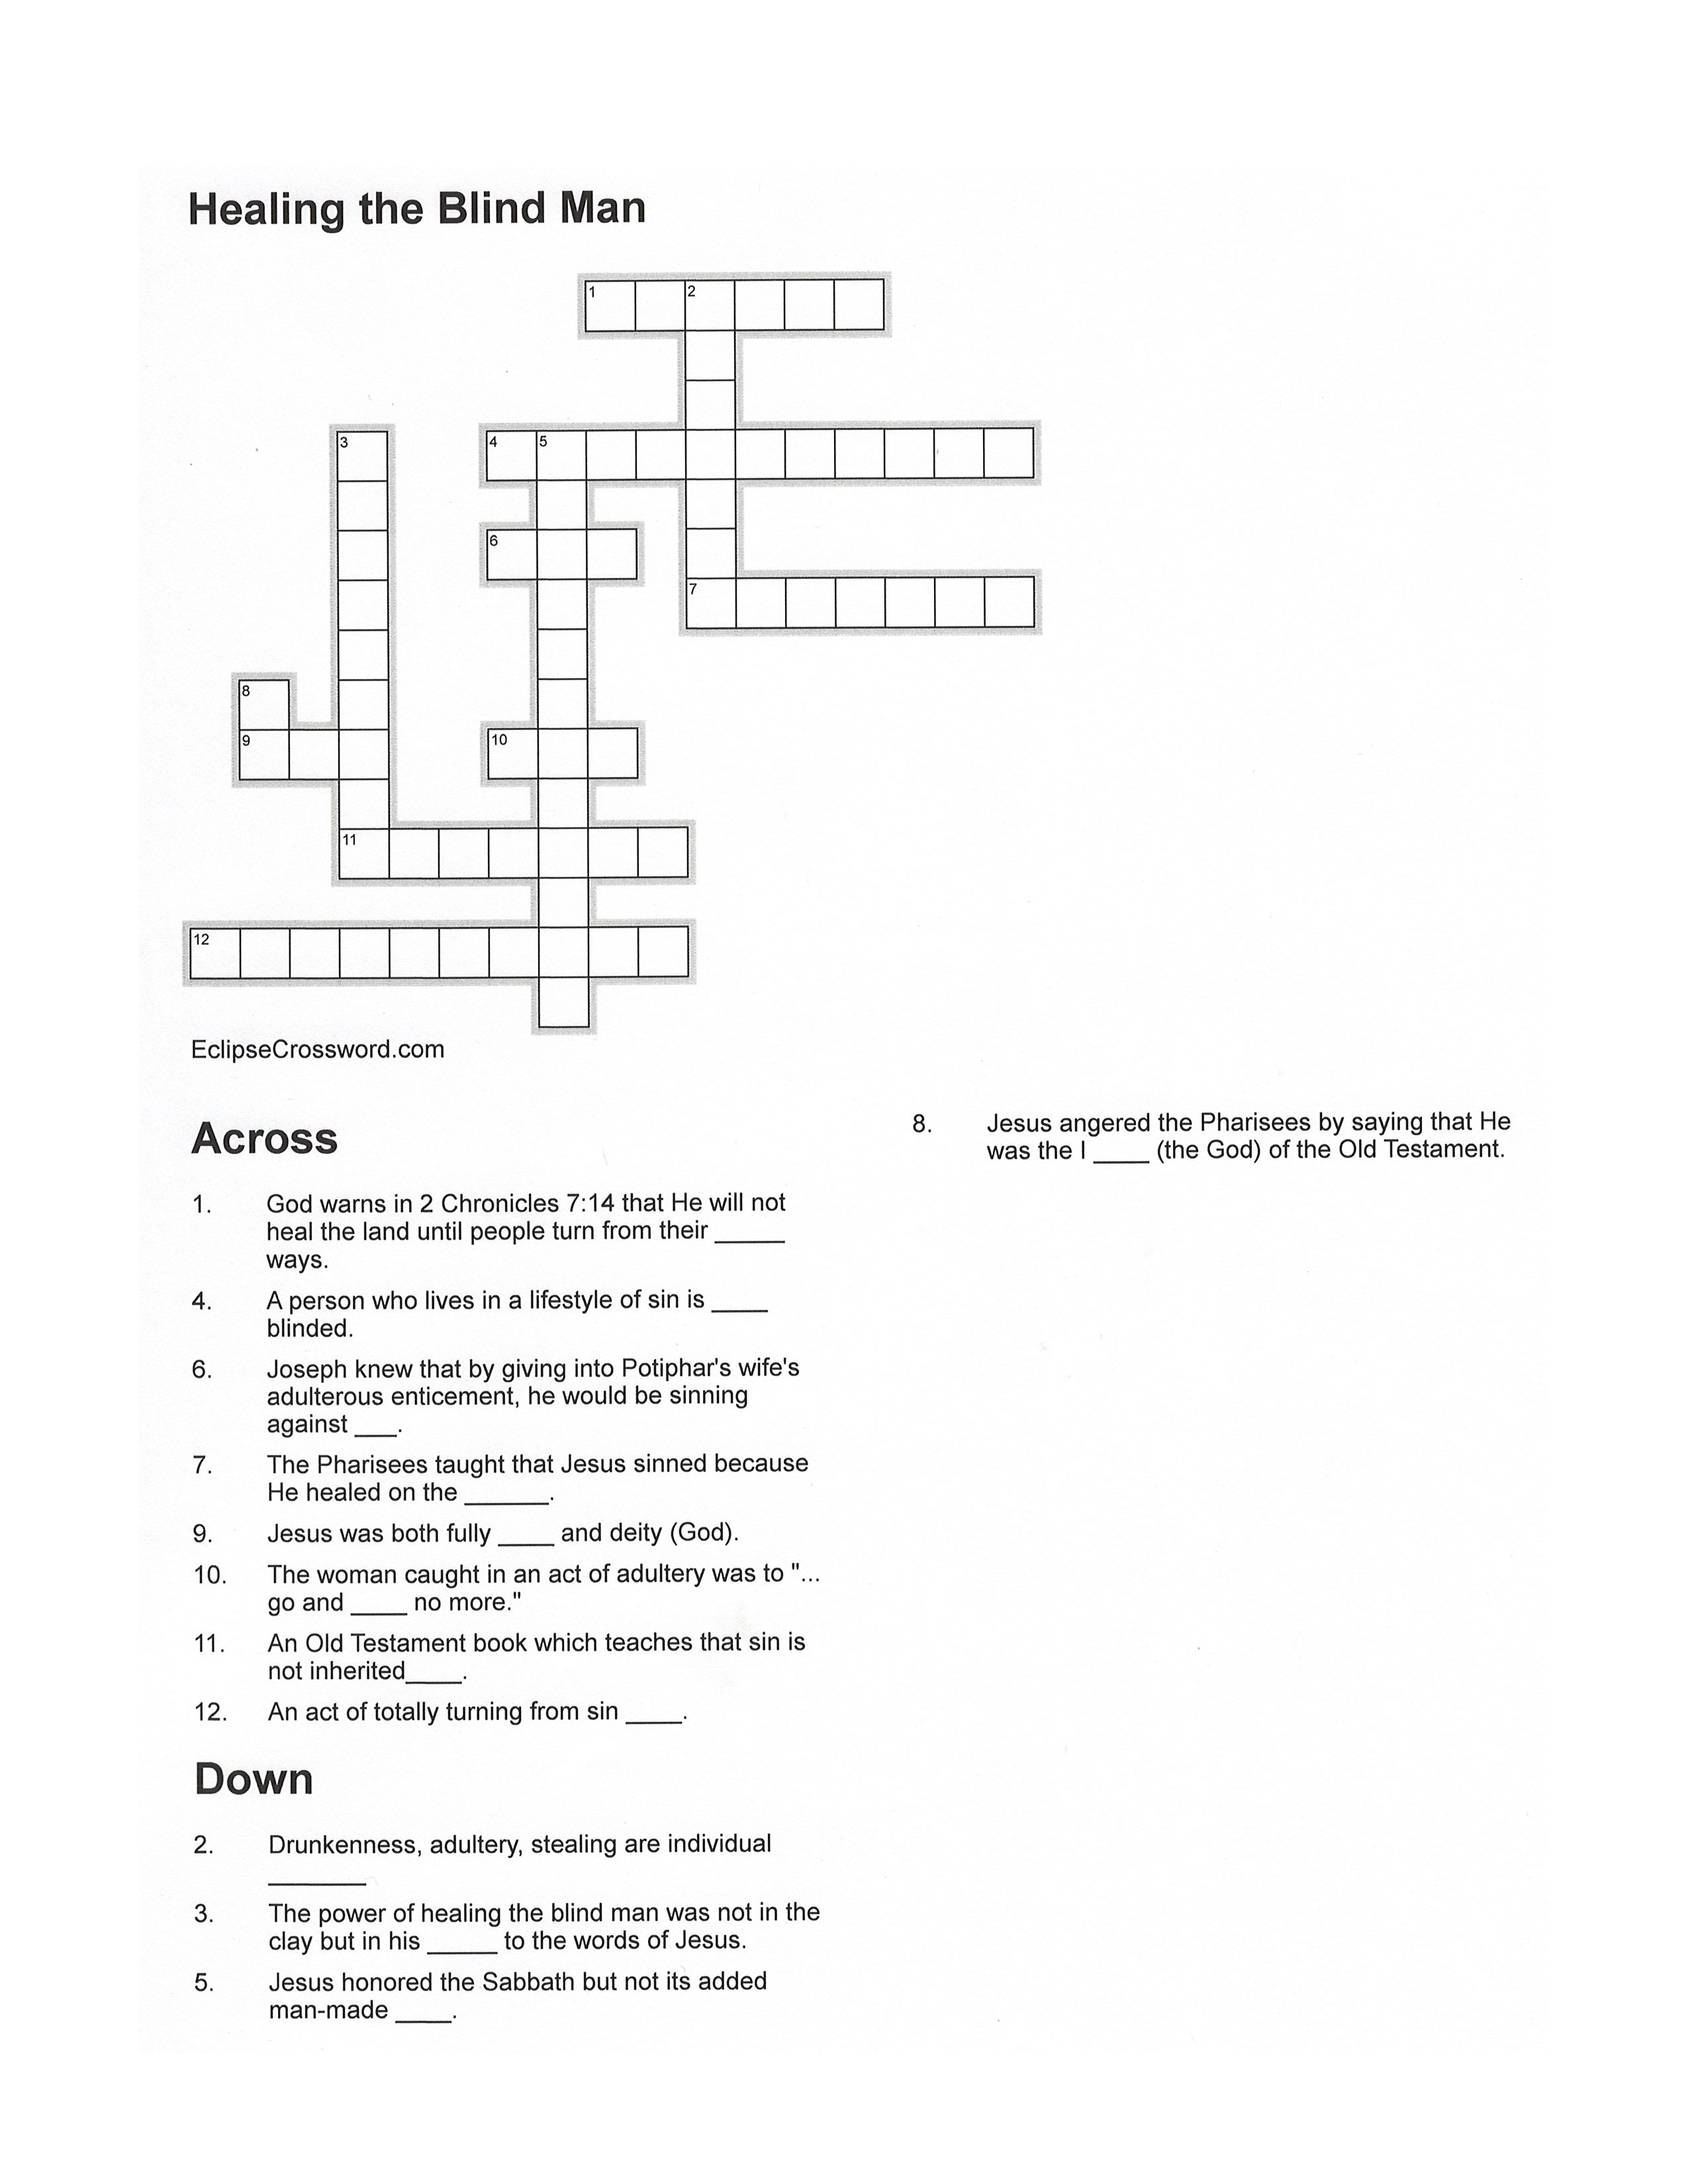 crossword puzzle on lesson